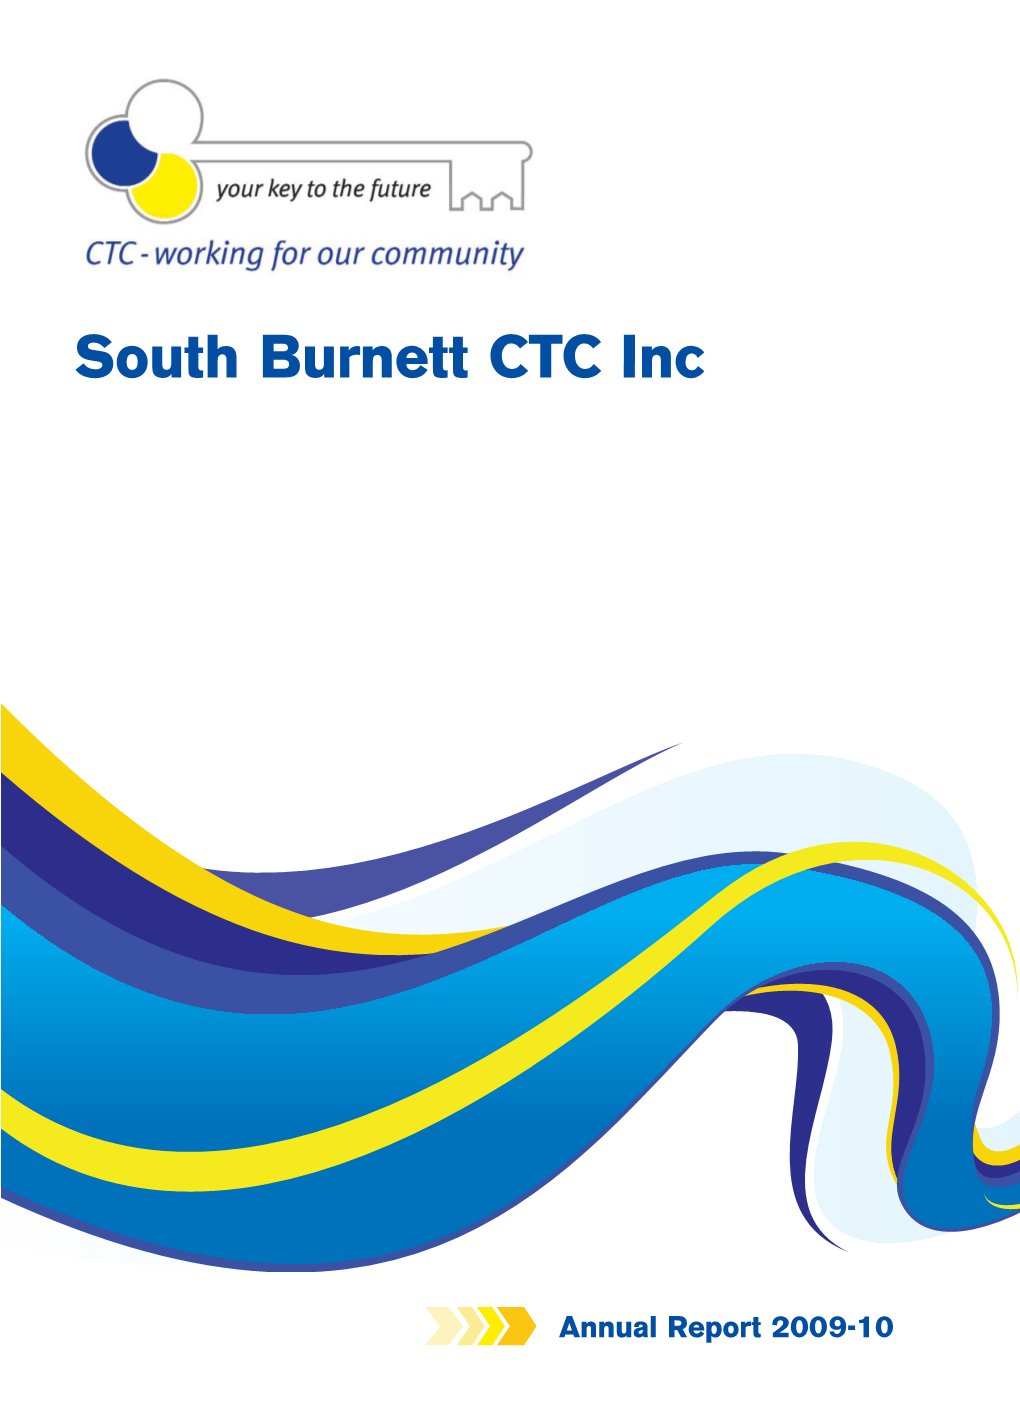 South Burnett CTC Inc